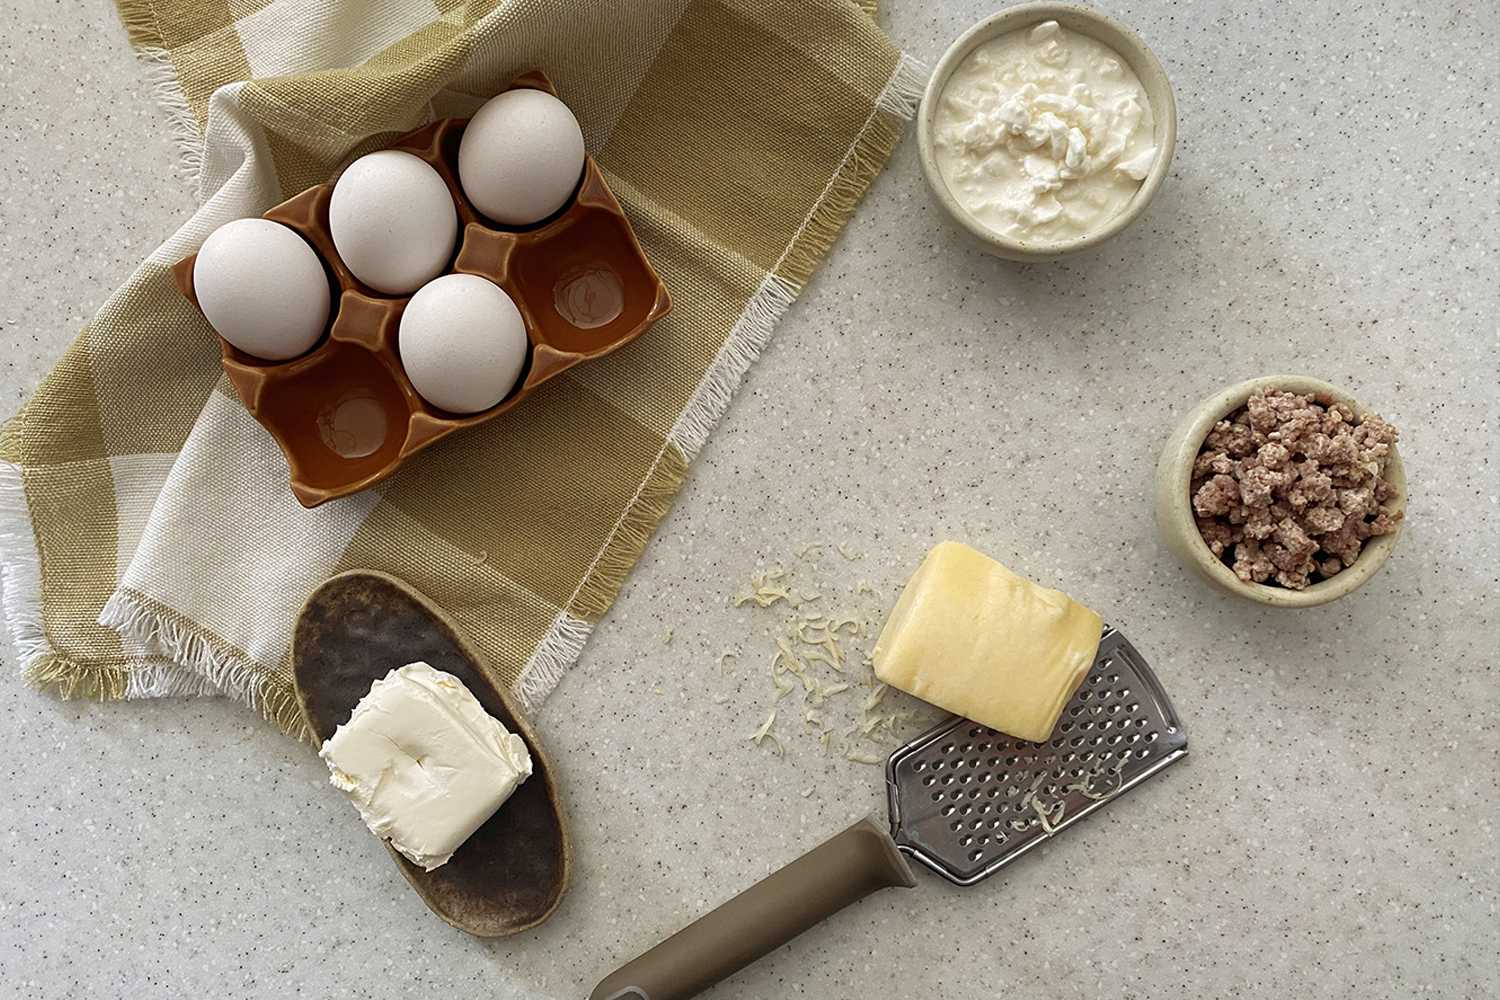 ingredients needed to make Instant Pot Egg Bites